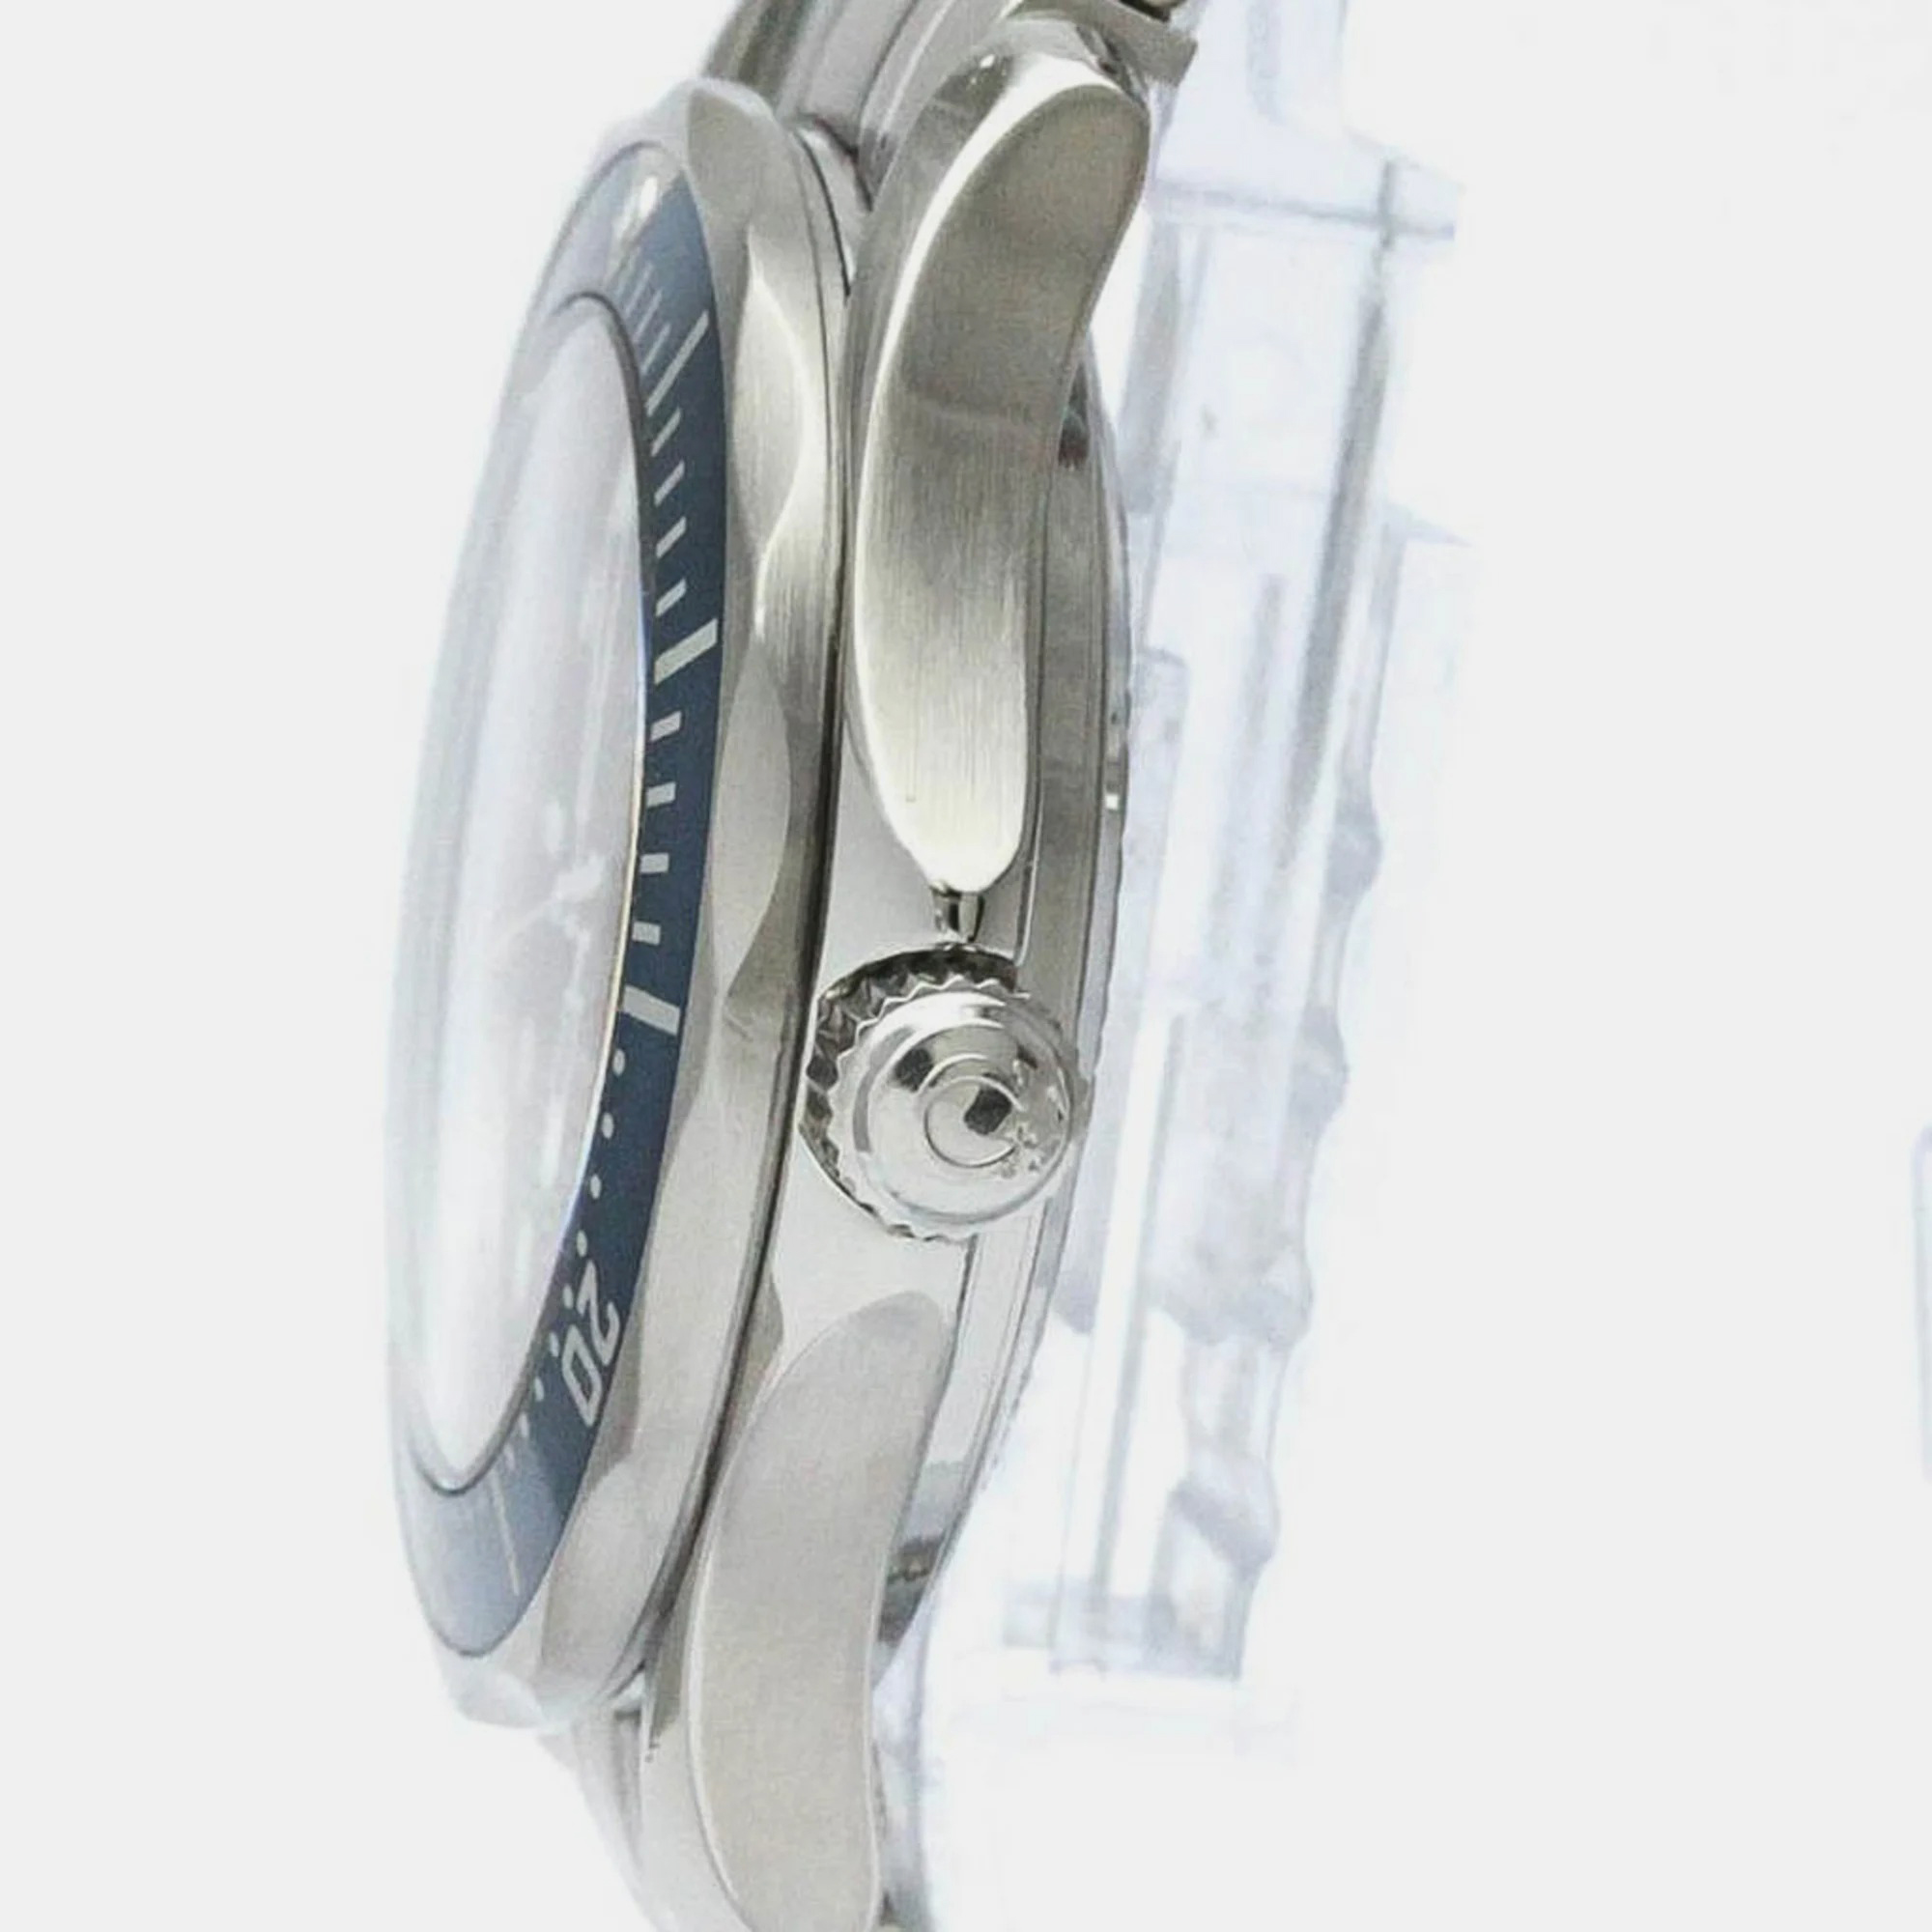 Omega Blue Stainless Steel Seamaster 2561.80 Quartz Men's Wristwatch 36 Mm